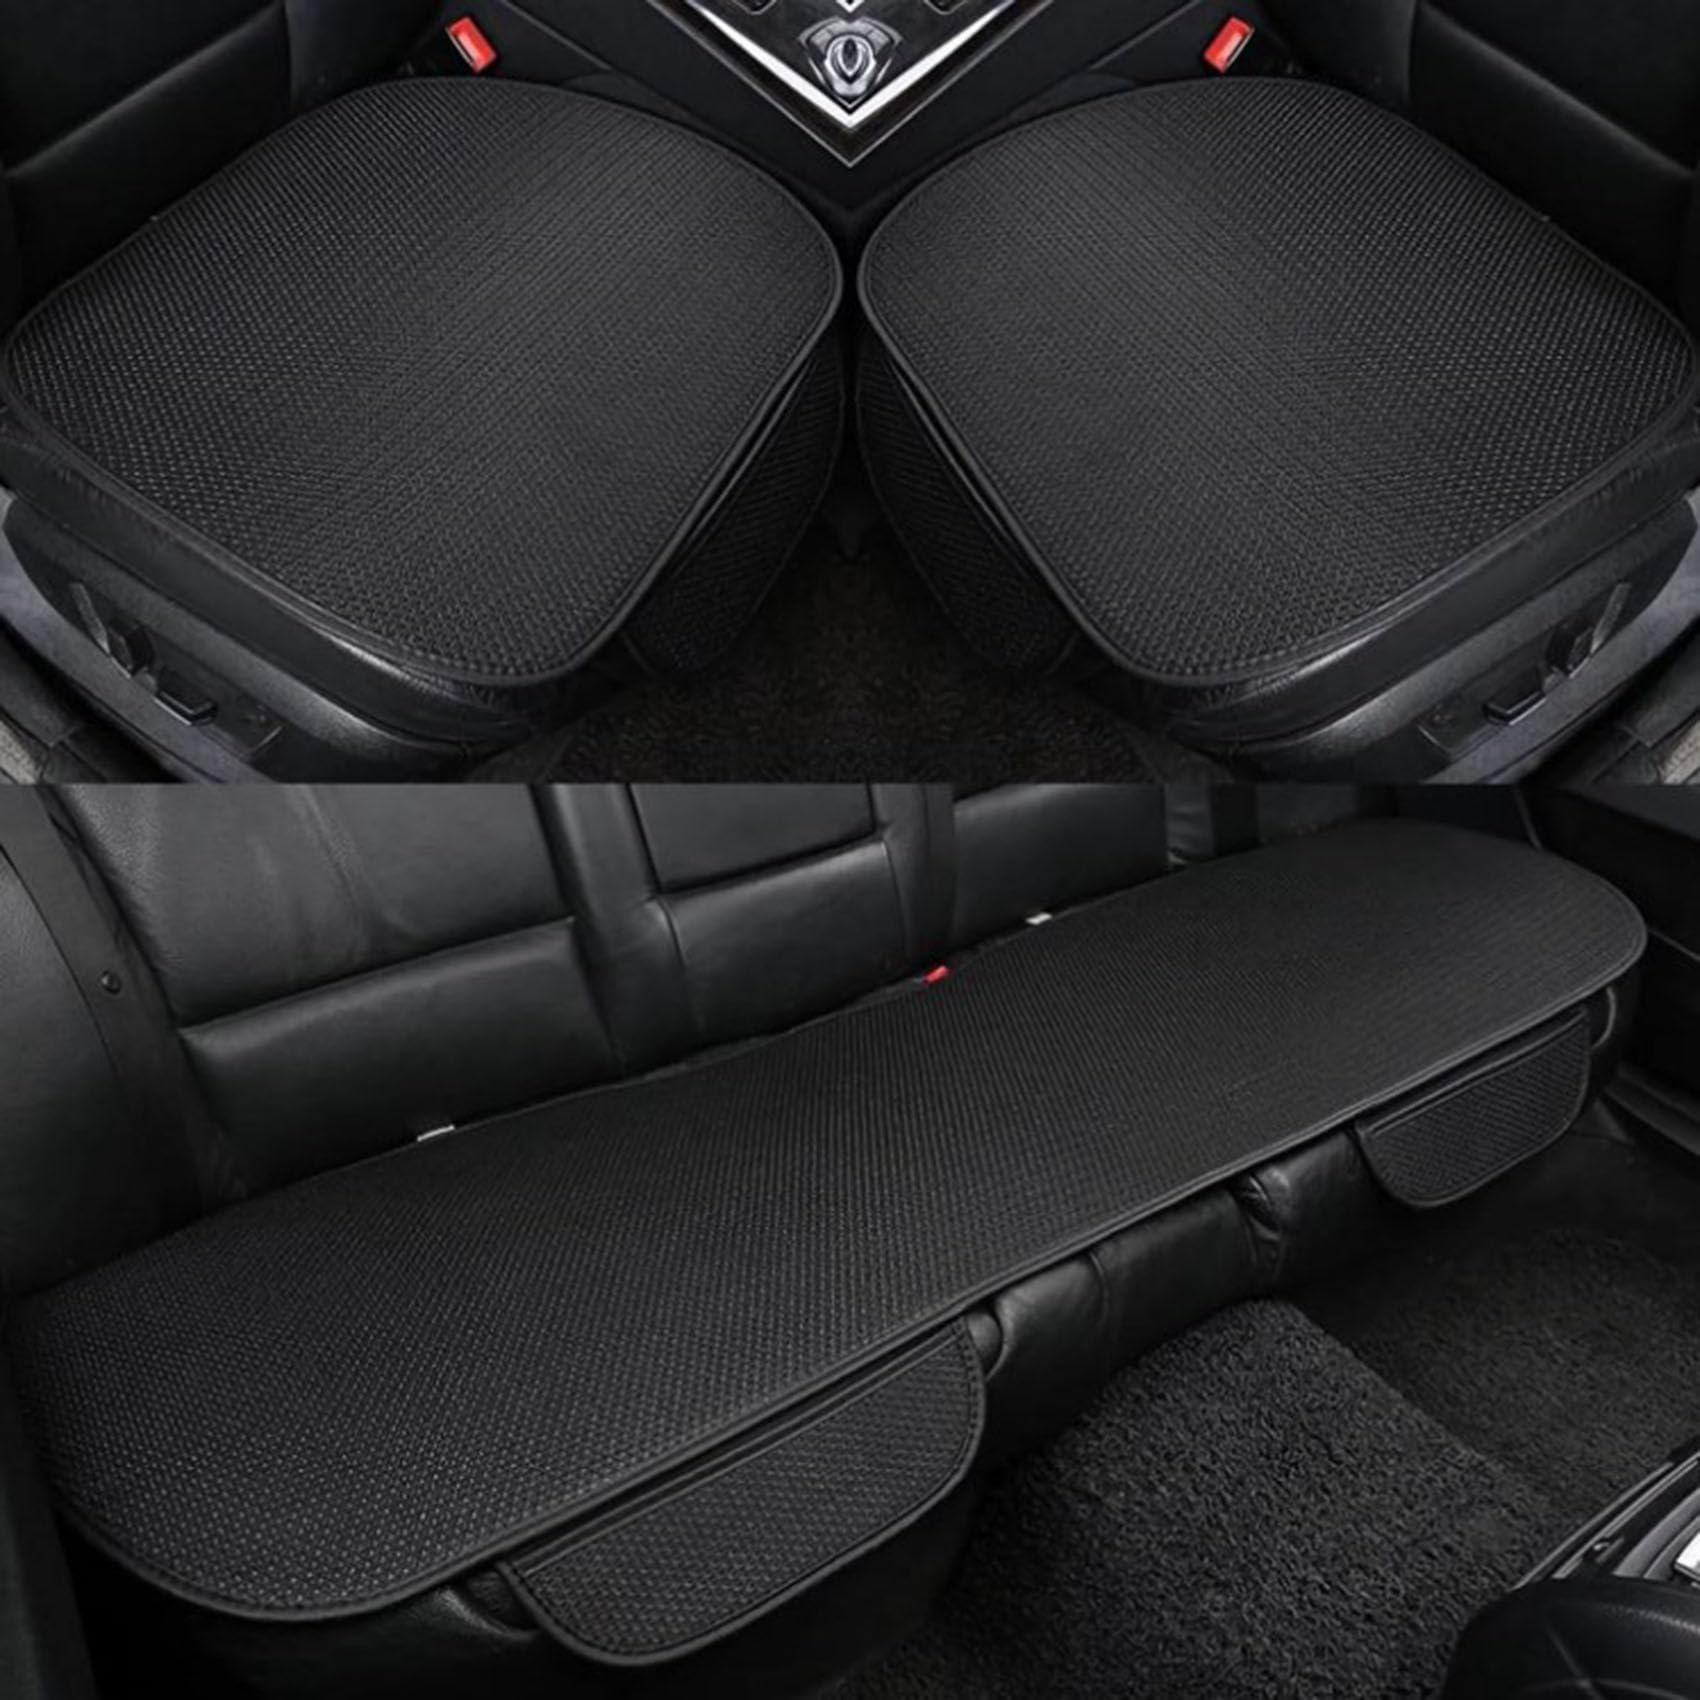 MRSYZDRM Auto Sitzbezüge Sets für Hyundai New 5 Seats Santafe 2013-2018,Eisseide Autositzbezüge Set Schonbezüge Sitzbezug Sitzauflagen Sitzschoner Innenraum Zubehör,A-Black-Full Set von MRSYZDRM